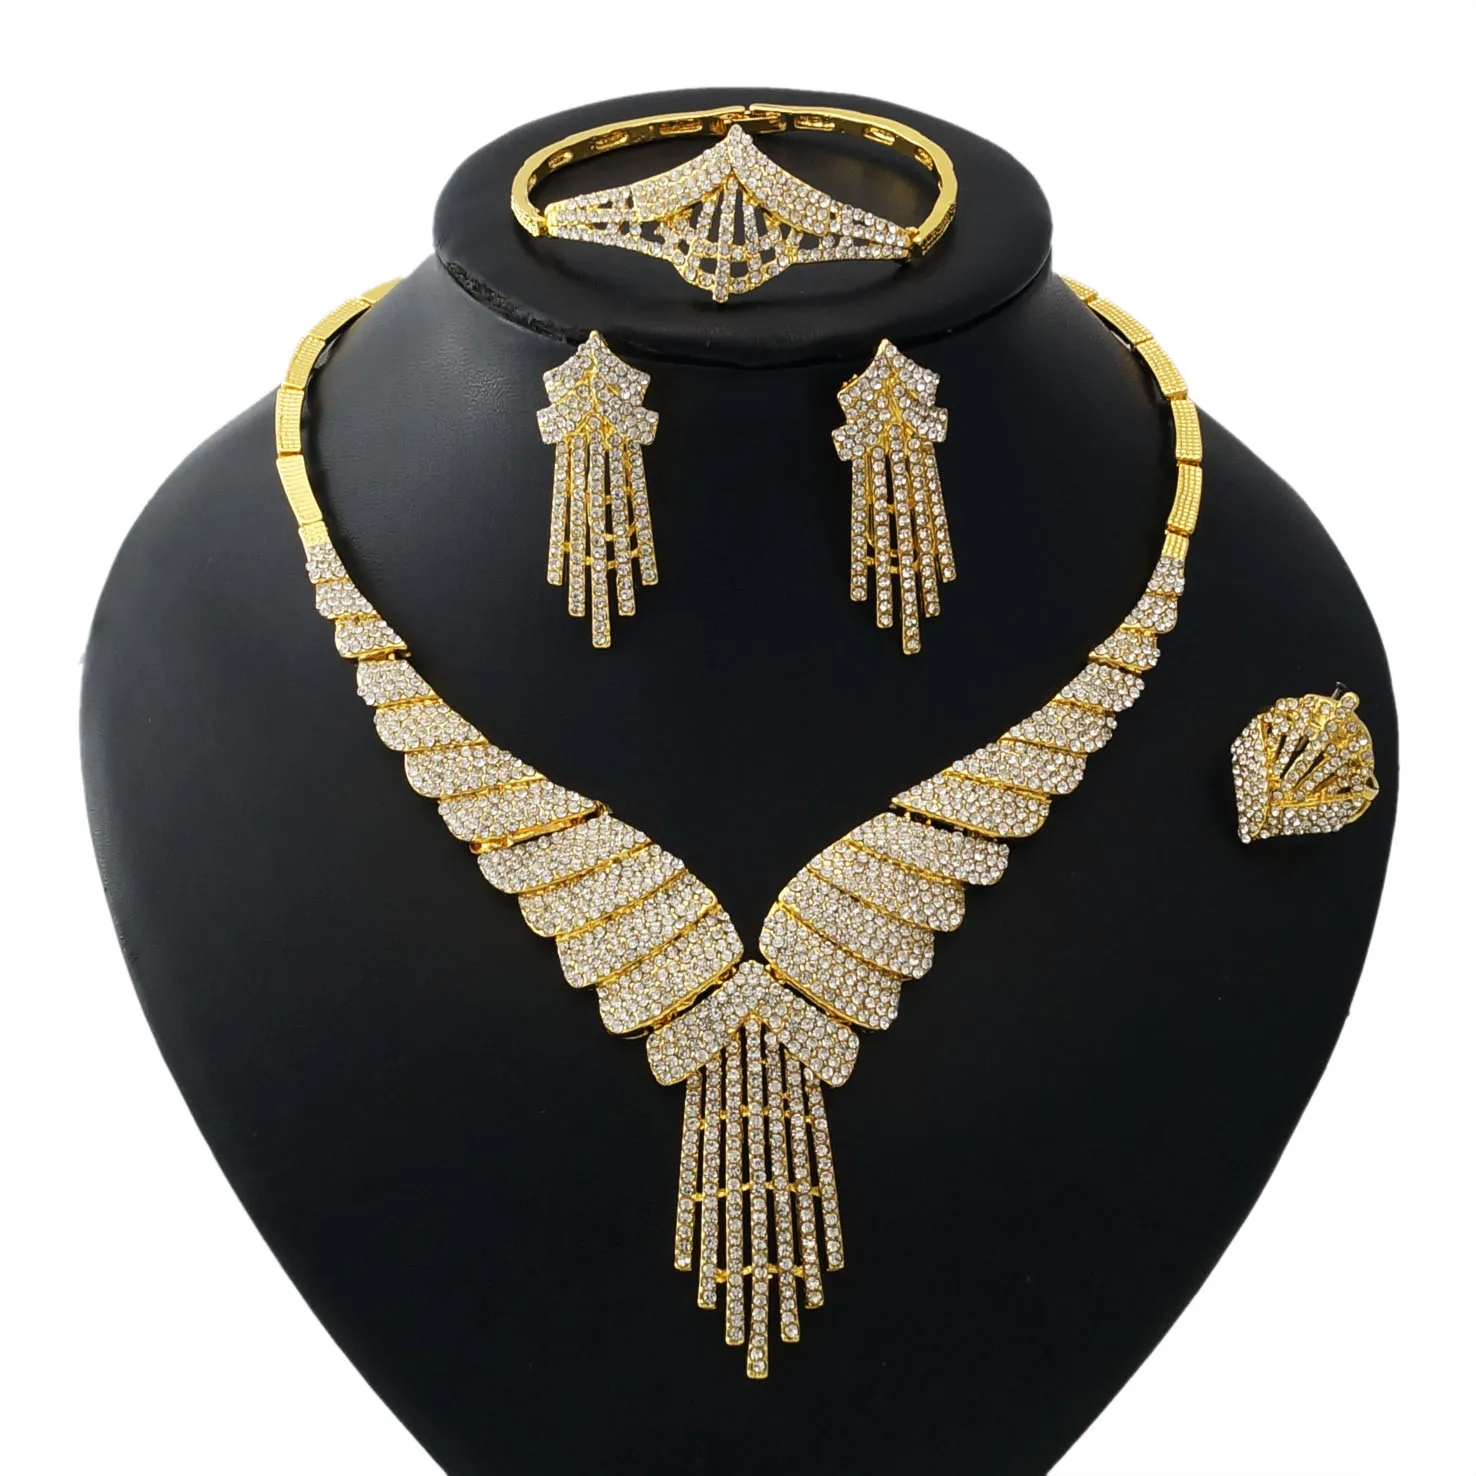 

Yulaili Dubai Gold Plated 24K Jewelry Sets With Large Natraul Crystal Shiny Bridal Nigerian Wedding African Jewelry